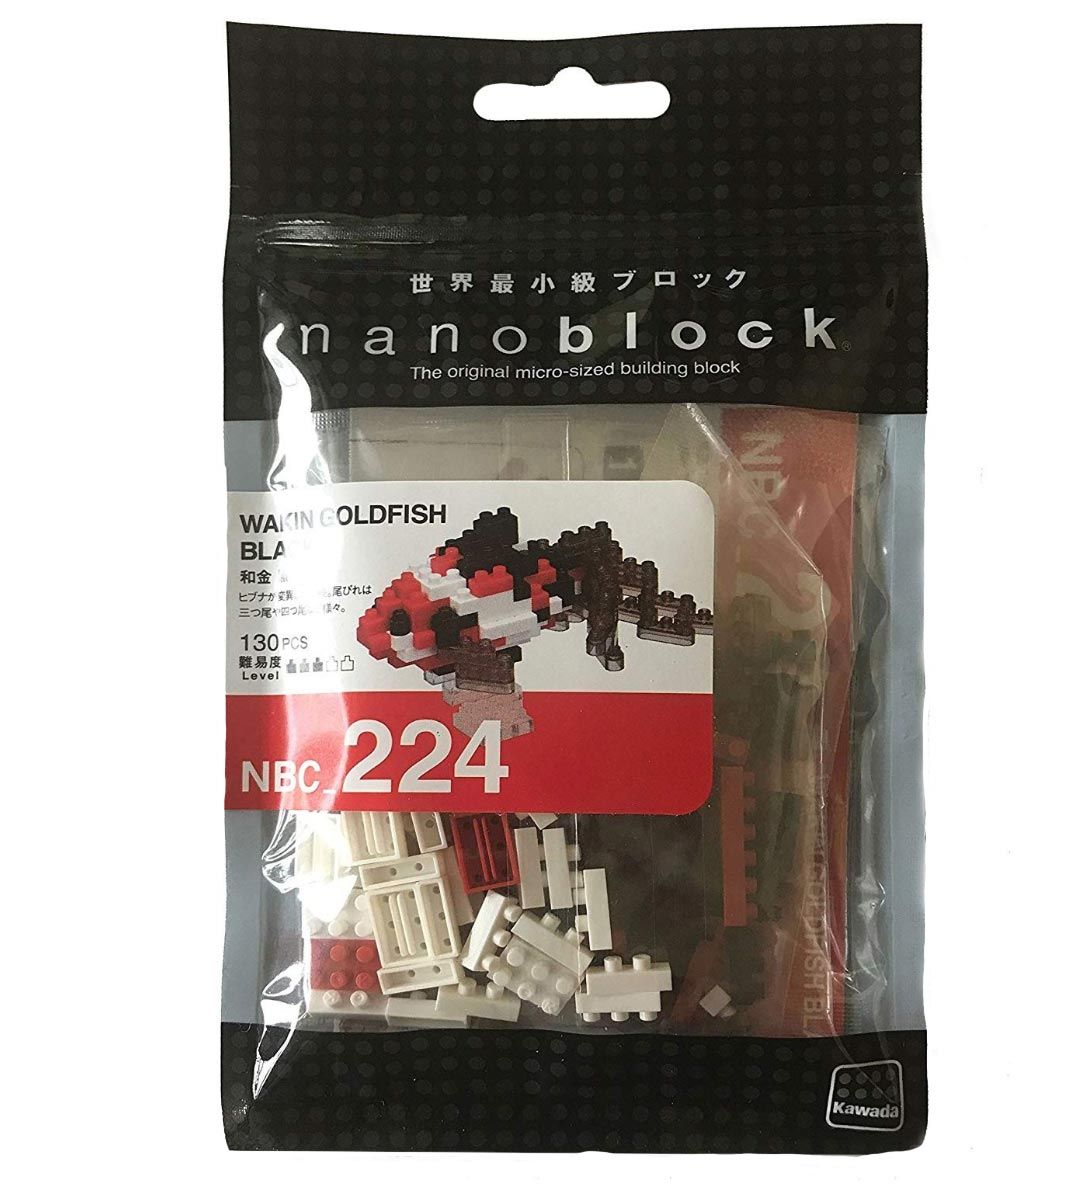 Nanoblock - Wakin Goldfish Black - NBC 224